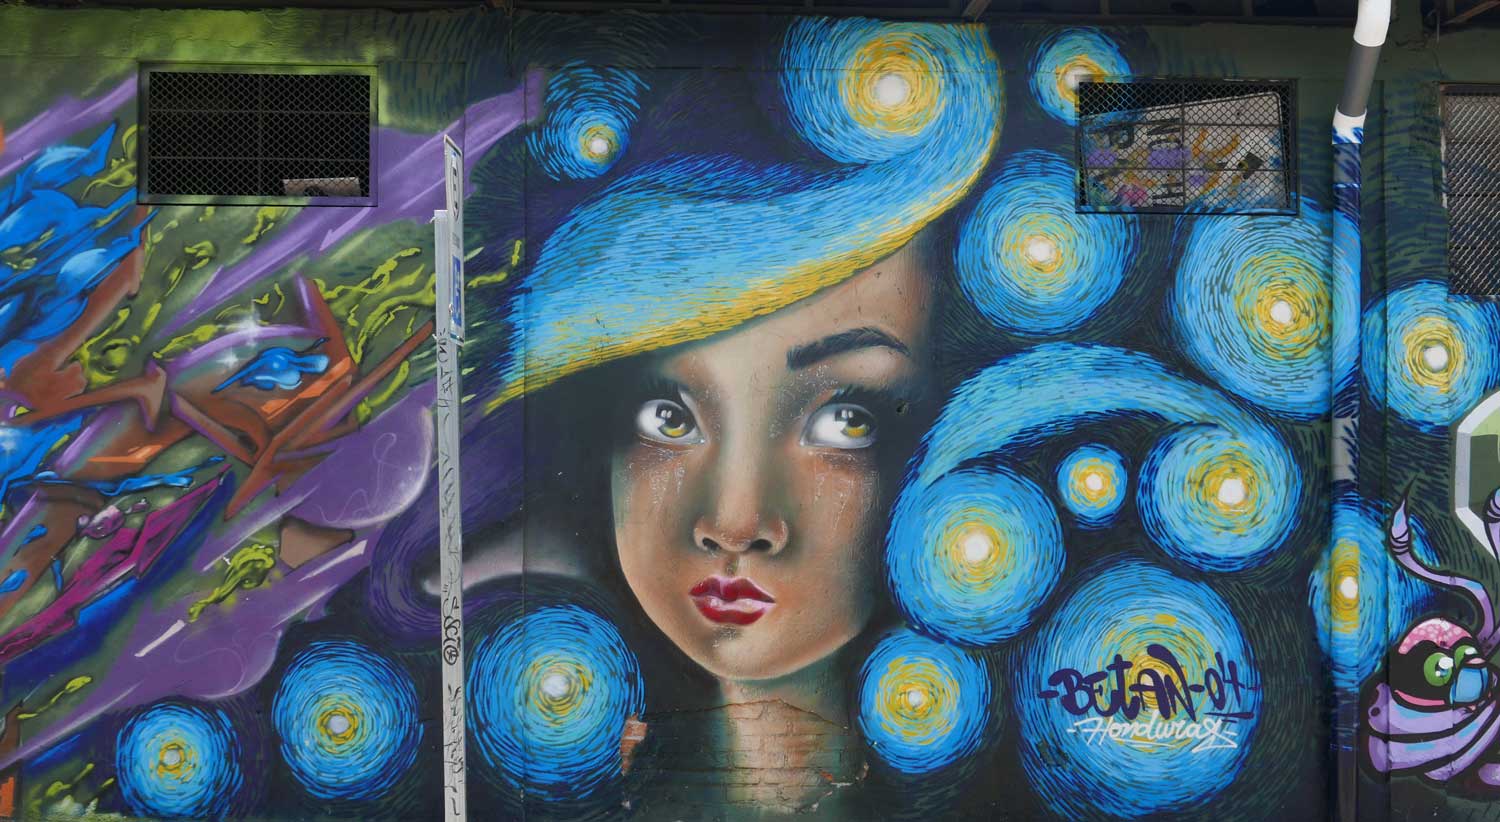 Fairytale princess. Street art in San Jose, Costa Rica